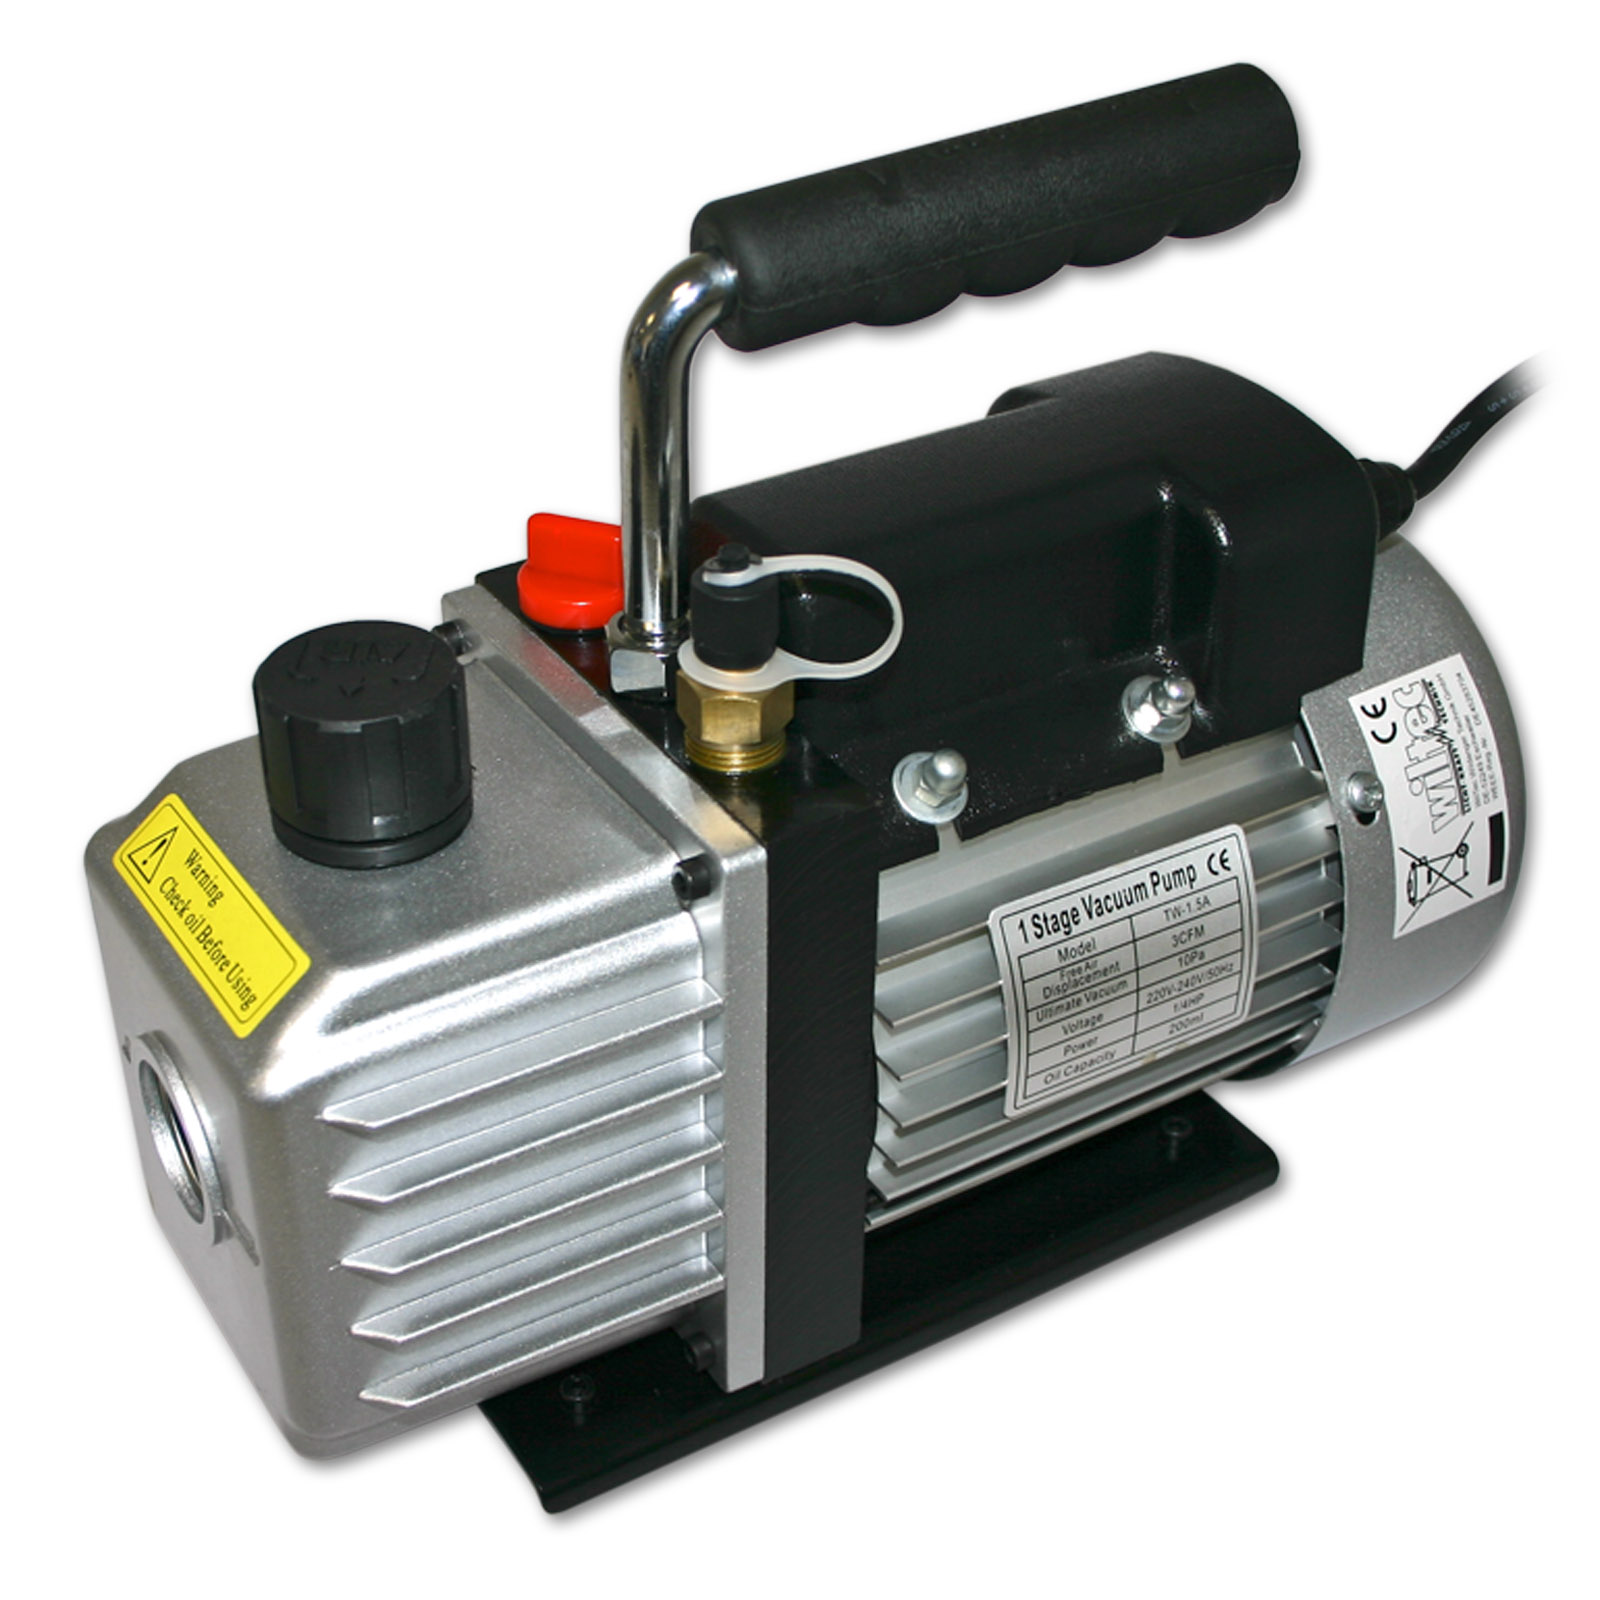 Unterdruckpumpe - Vakuumpumpe Vakuum Pumpe 30l - 1cfm / 10Pa